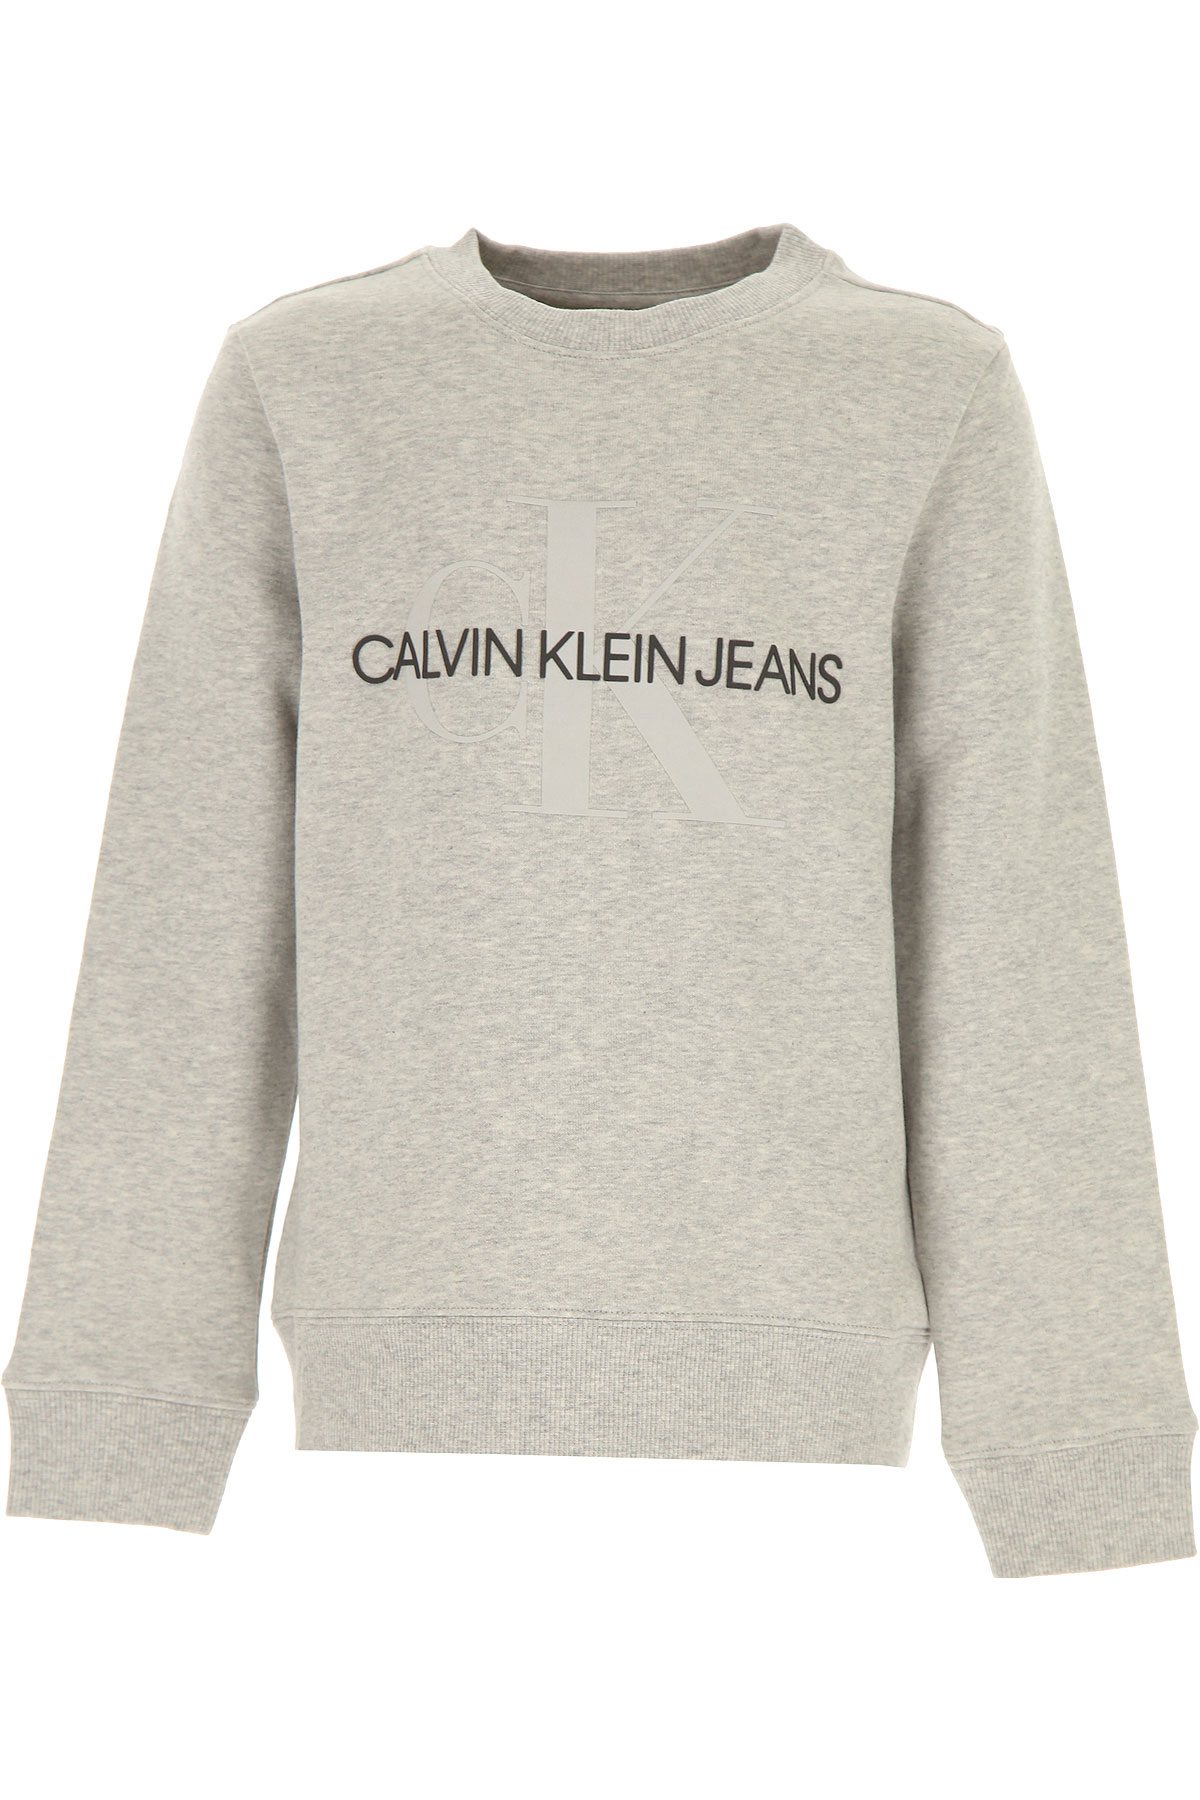 Calvin Klein Kinder Sweatshirt & Kapuzenpullover für Mädchen Günstig im Sale, Grau, Baumwolle, 2017, 10Y 14Y 16Y 4Y 6Y 8Y